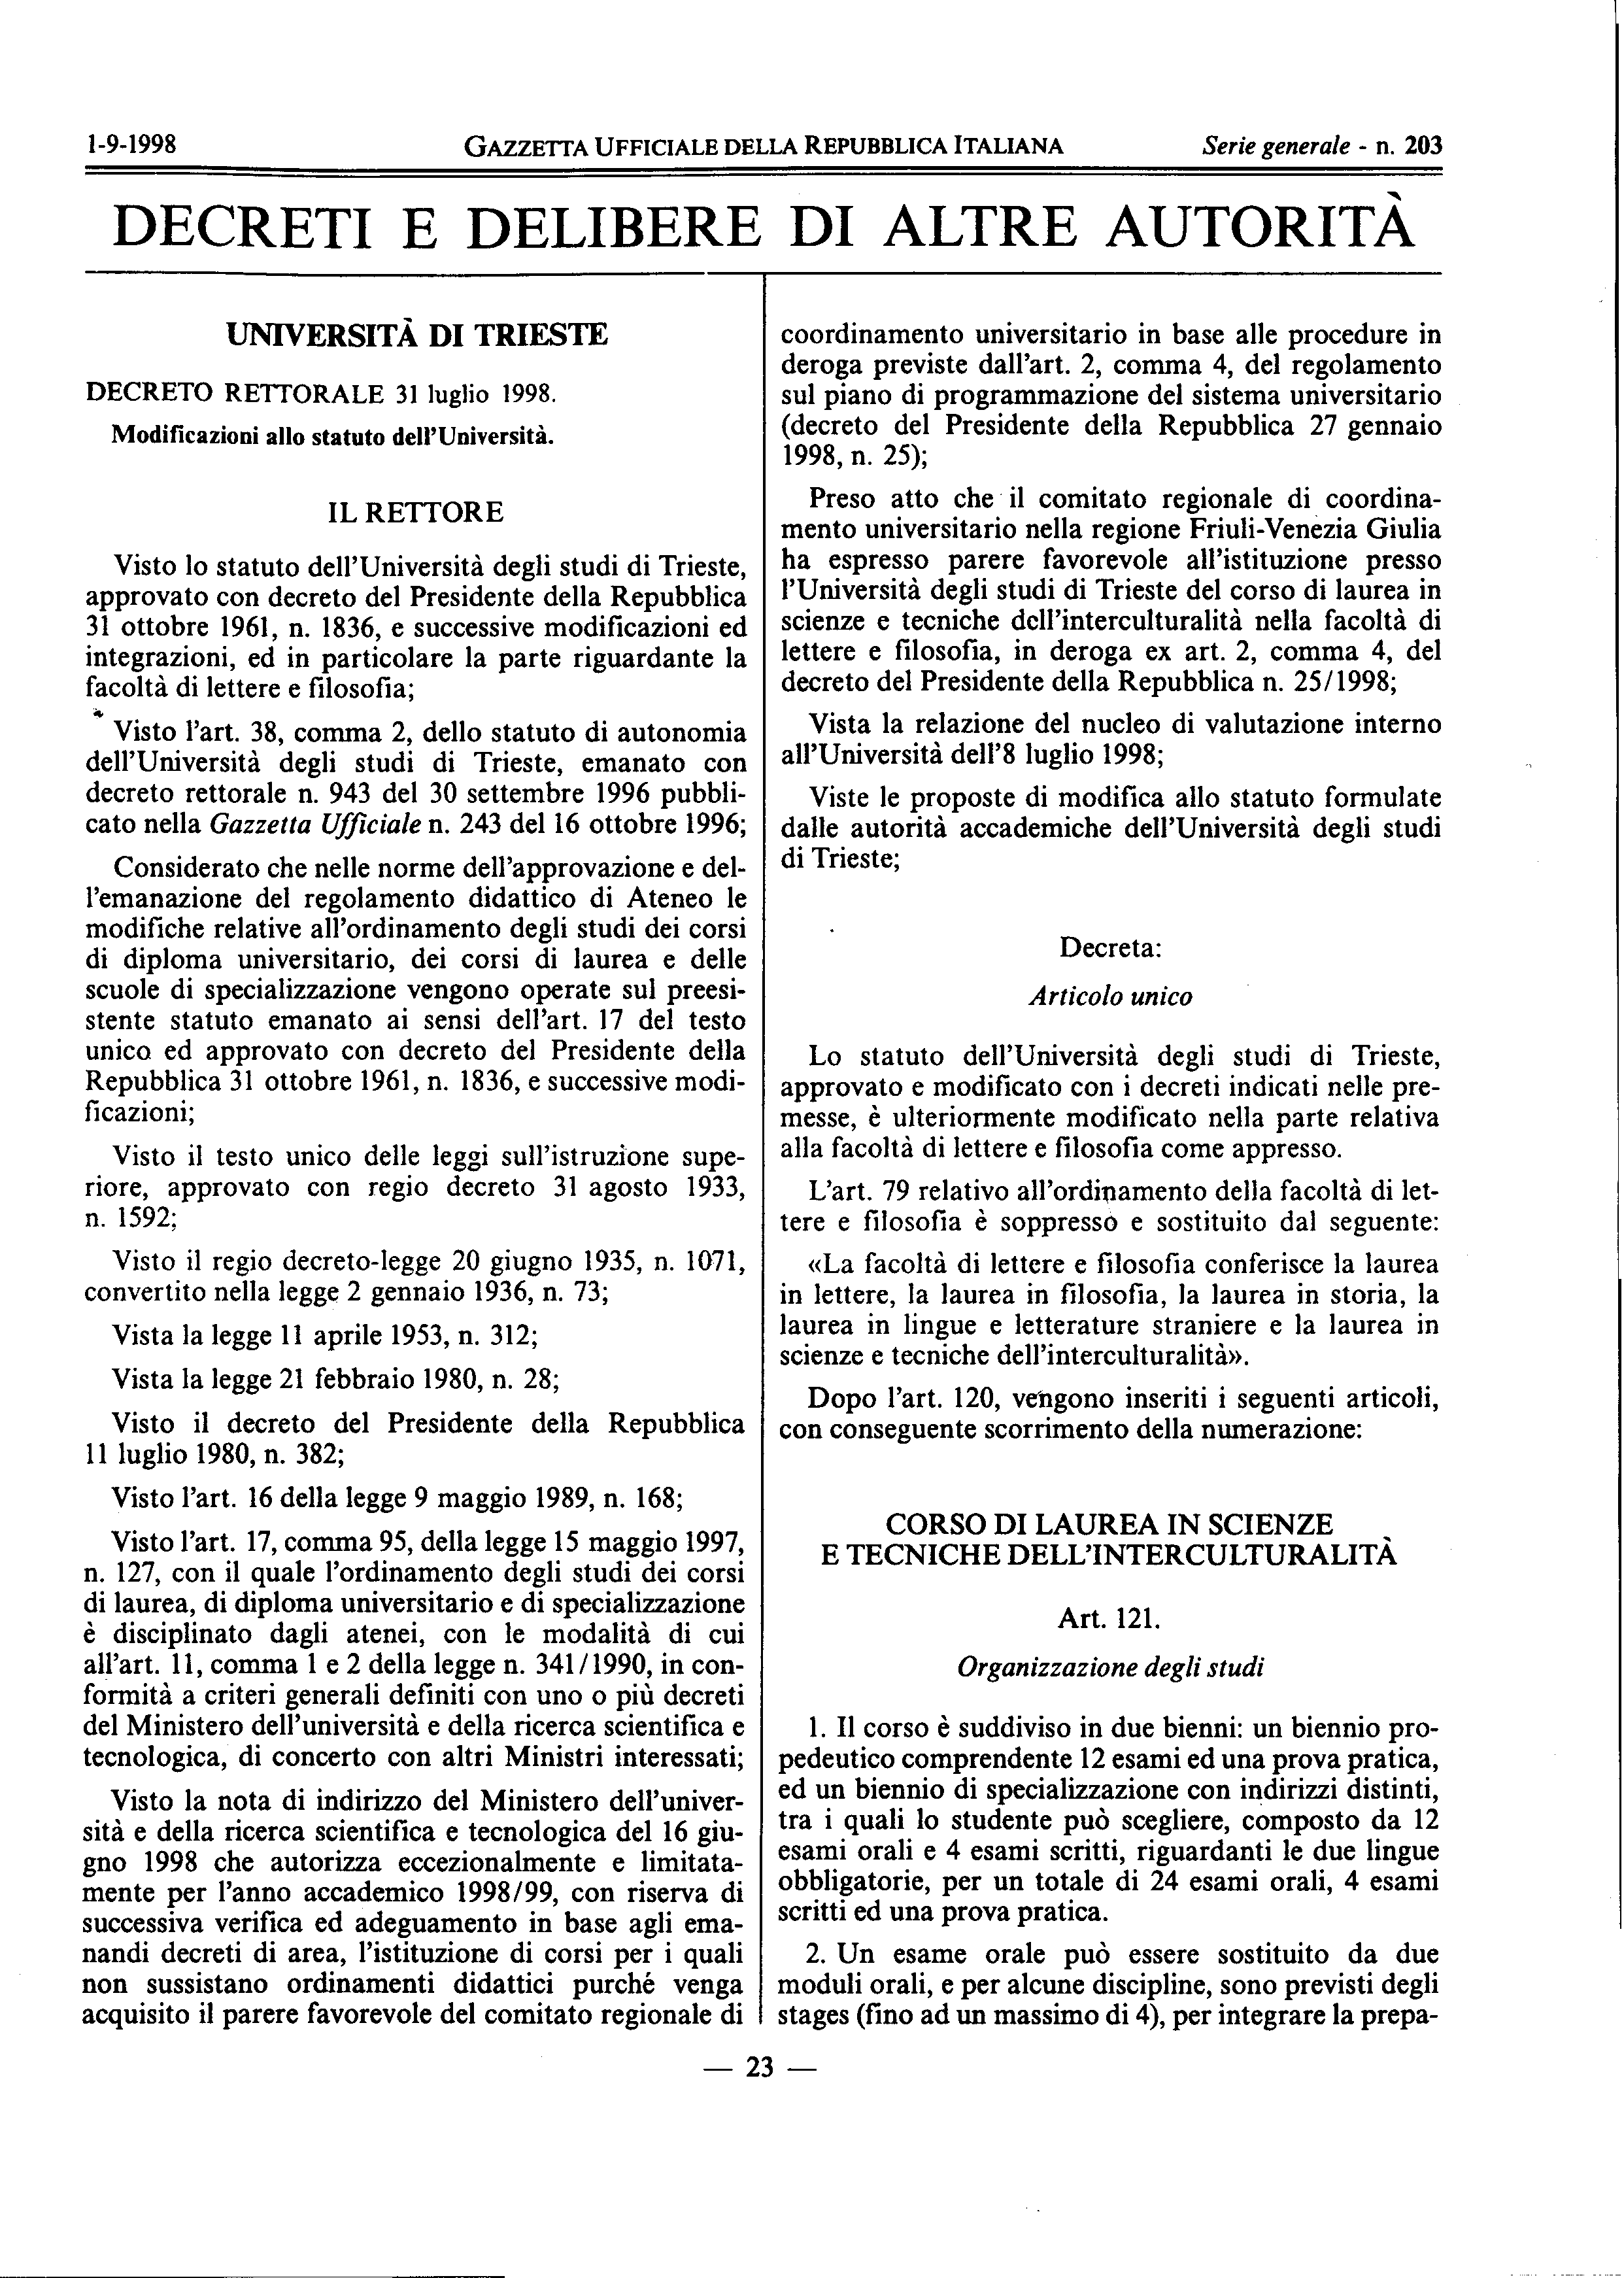 G.U. Serie Generale n. 203 del 1 settembre 1998 pag.23